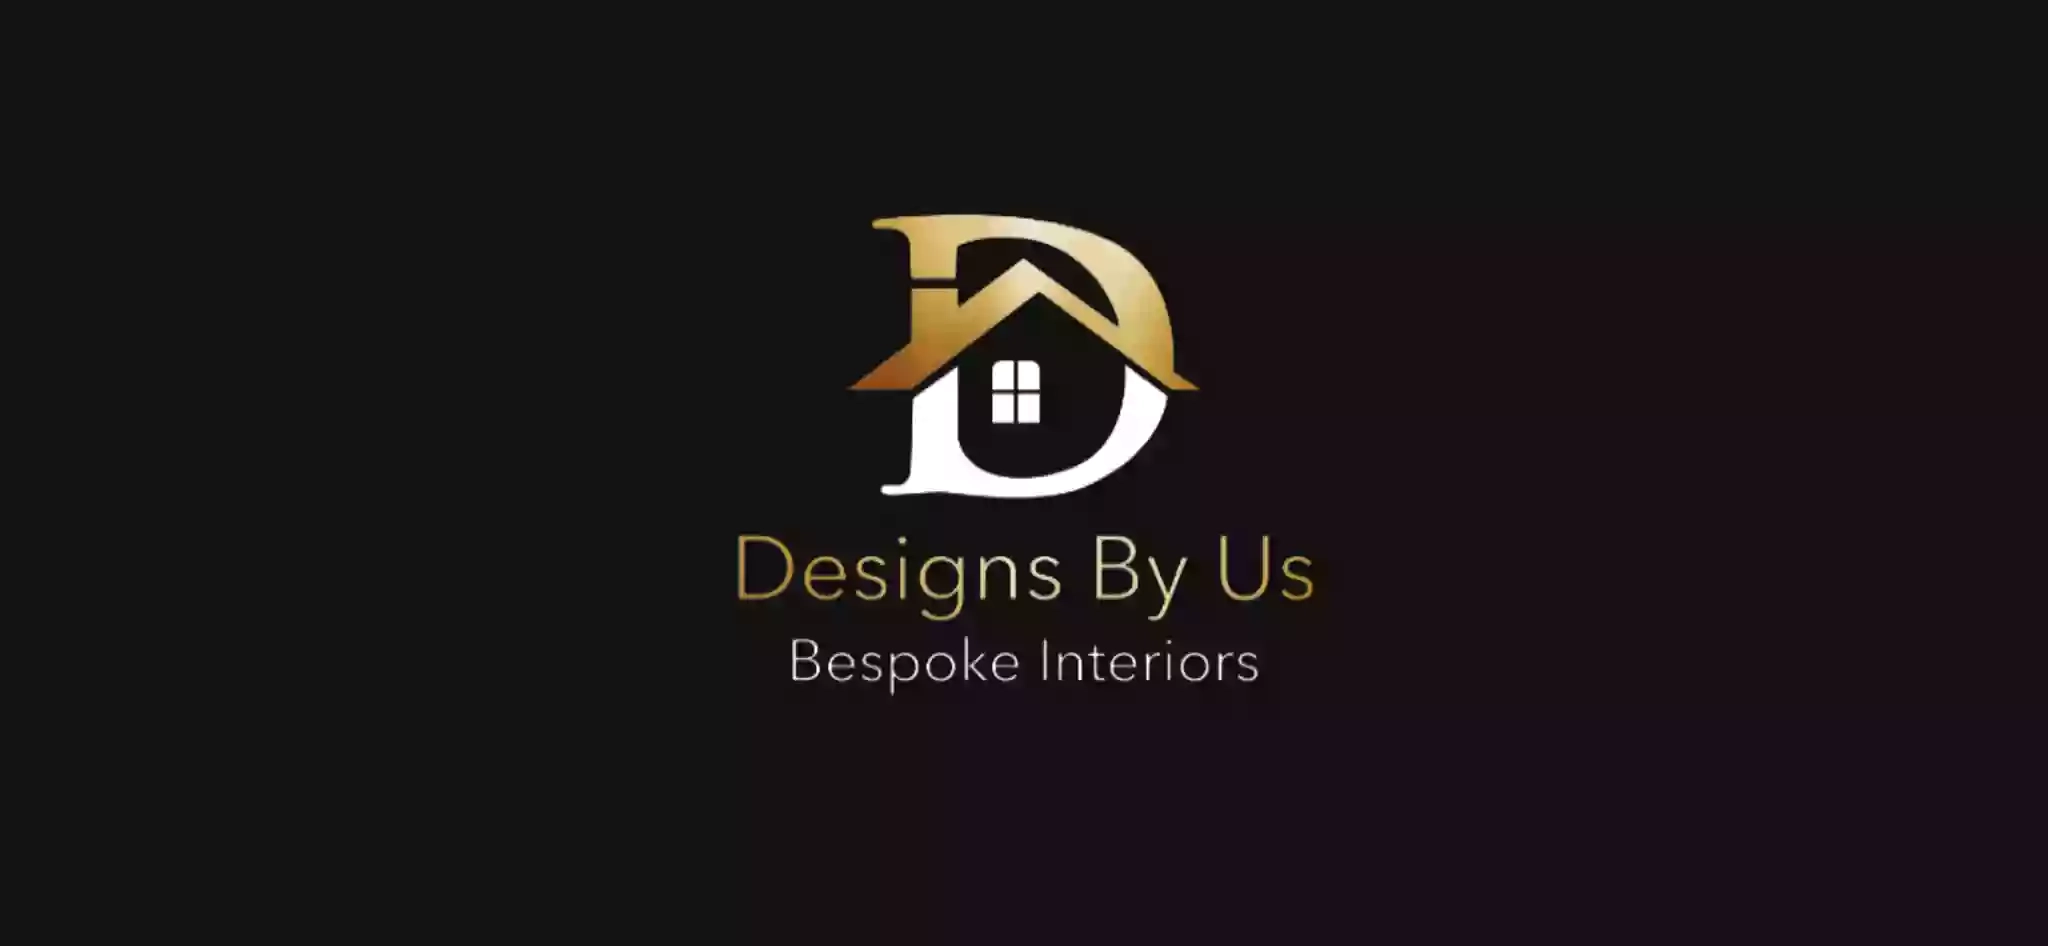 Designs By Us Ltd